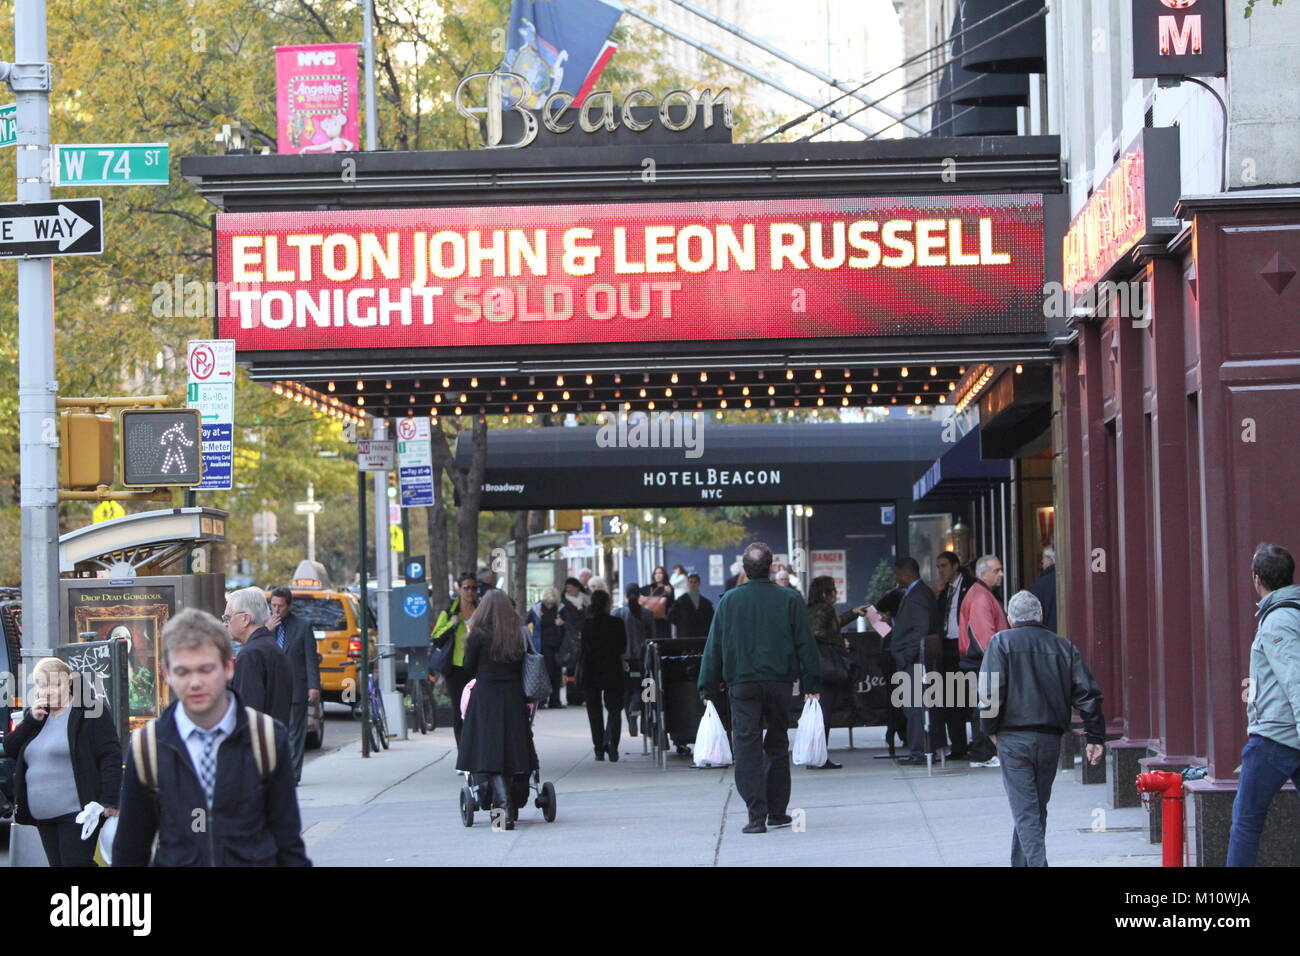 Elton John and Leon Russell Beacon Th in NY billboard sign 10/19/2010 photo Michael Brito Stock Photo